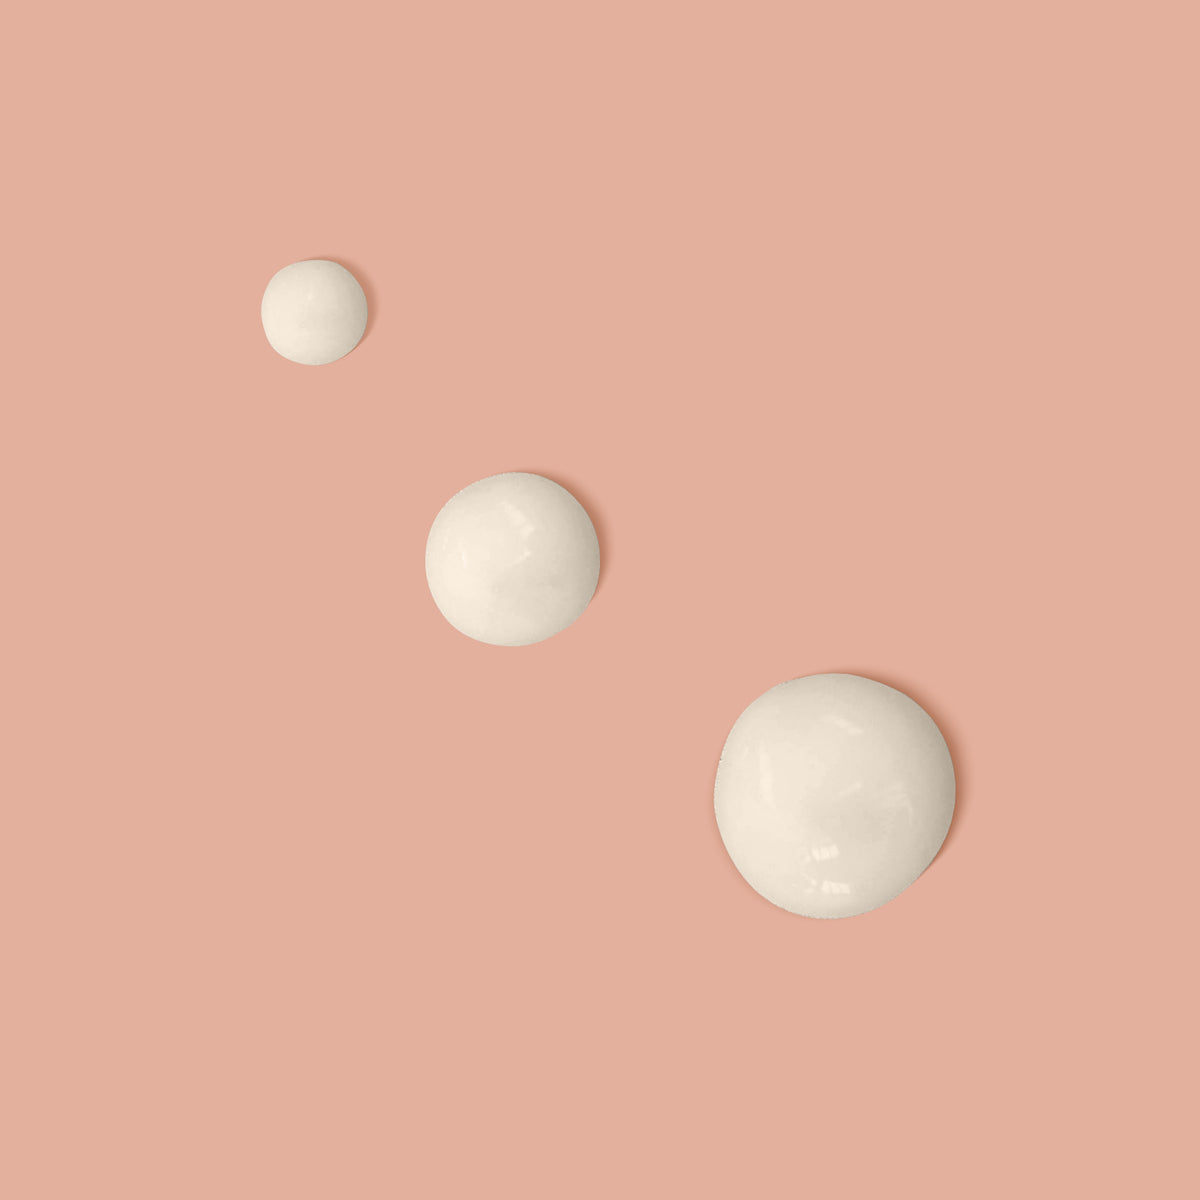 Three drops of face tan cream on peach coloured background